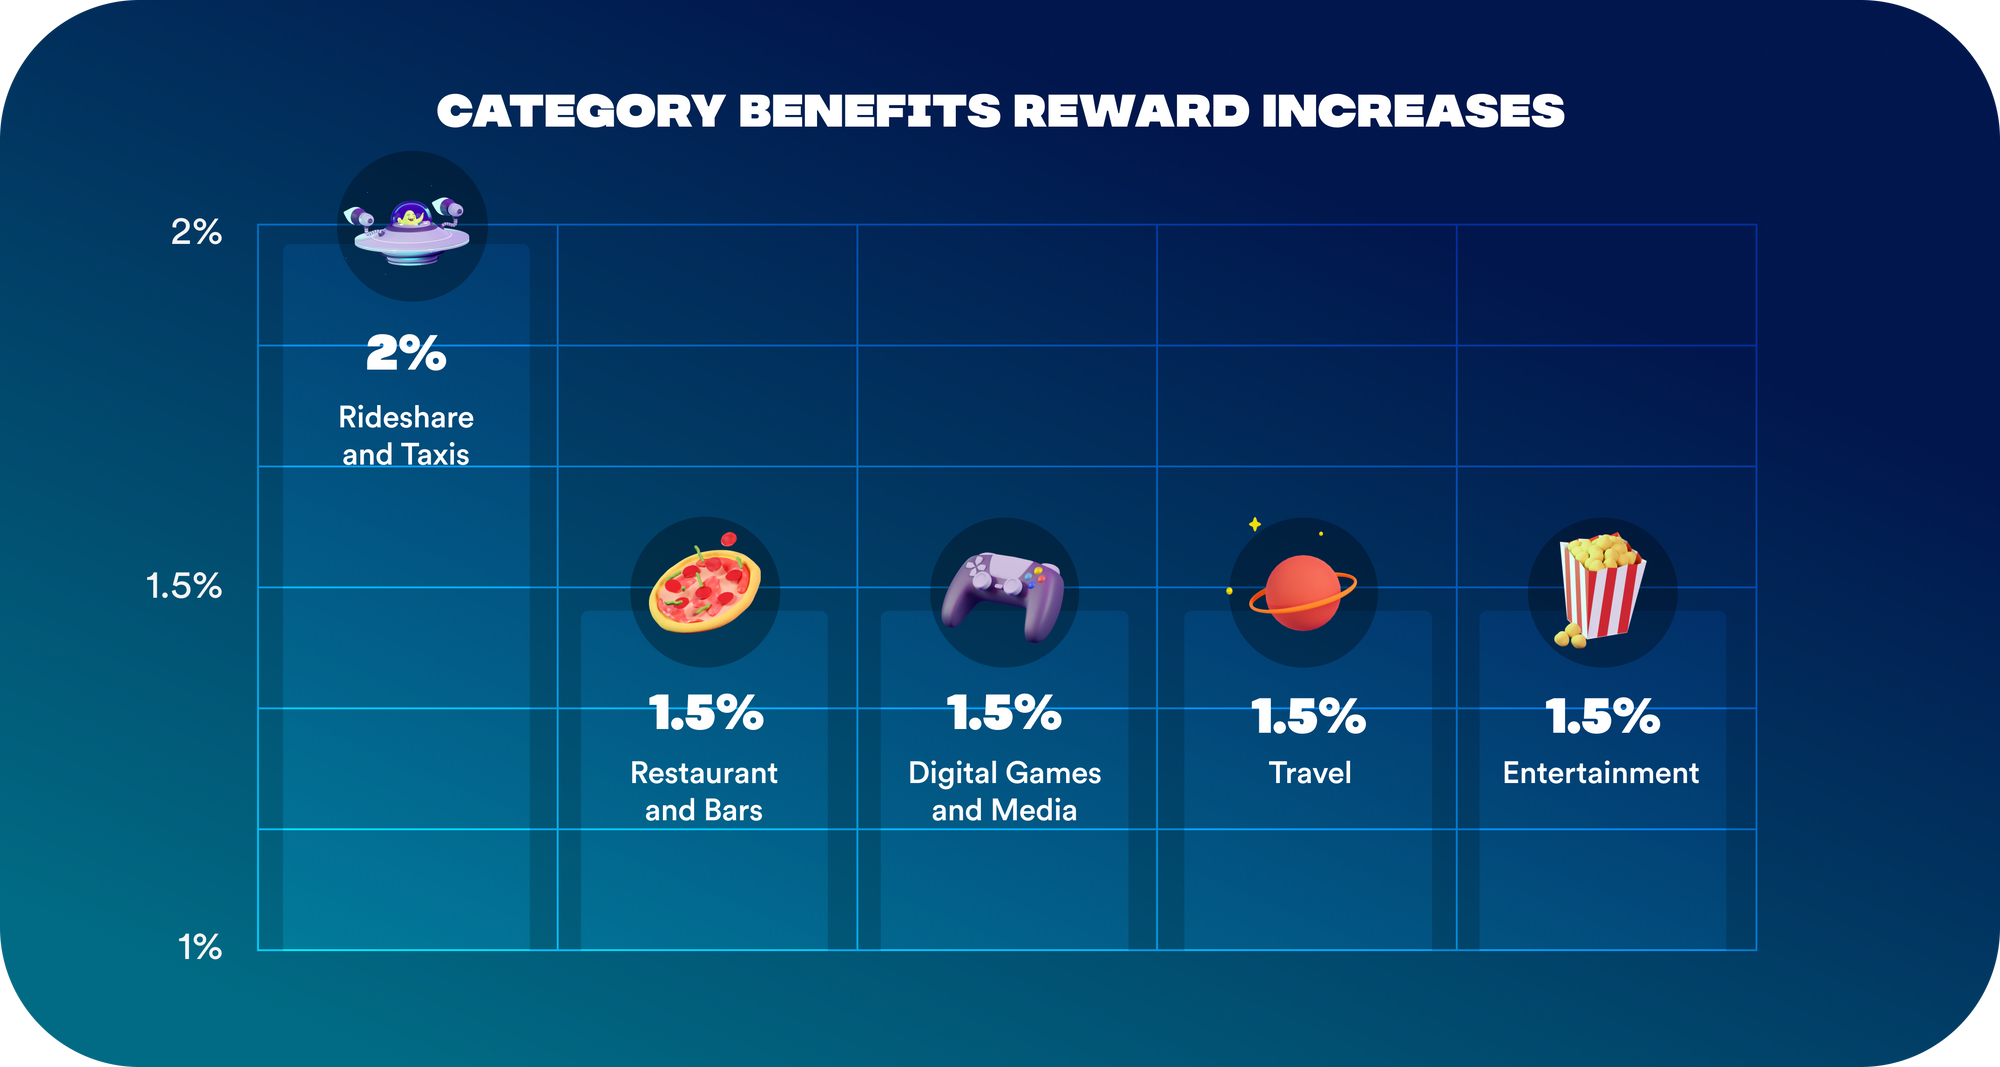 Rewards Program Update: Boosts and Busts